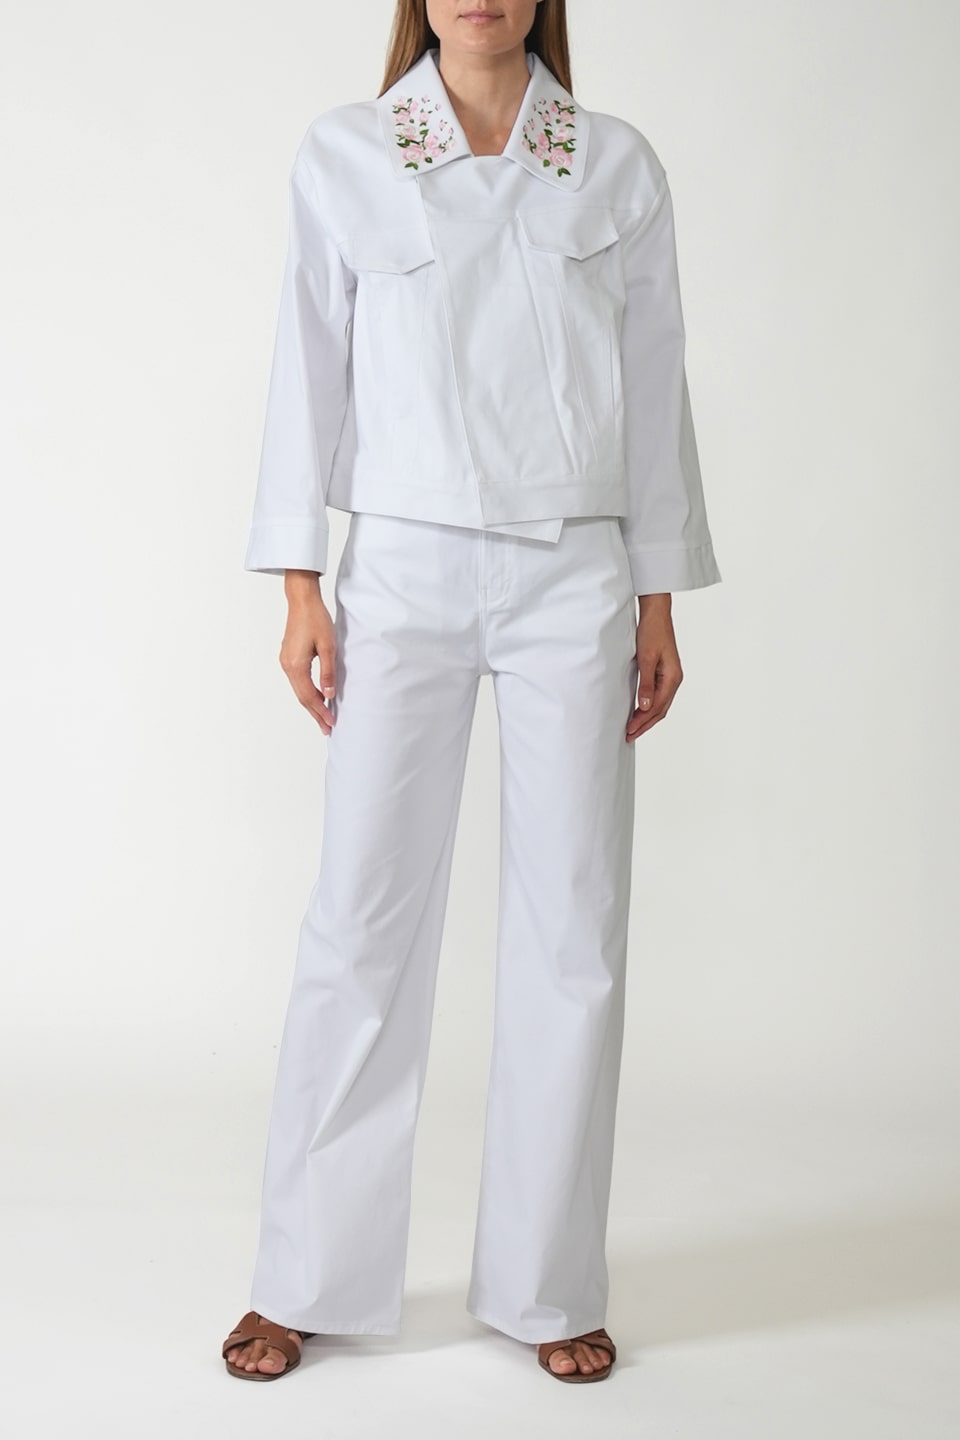 Shop online trendy White Women blazers from Vivetta Fashion designer. Product gallery 1